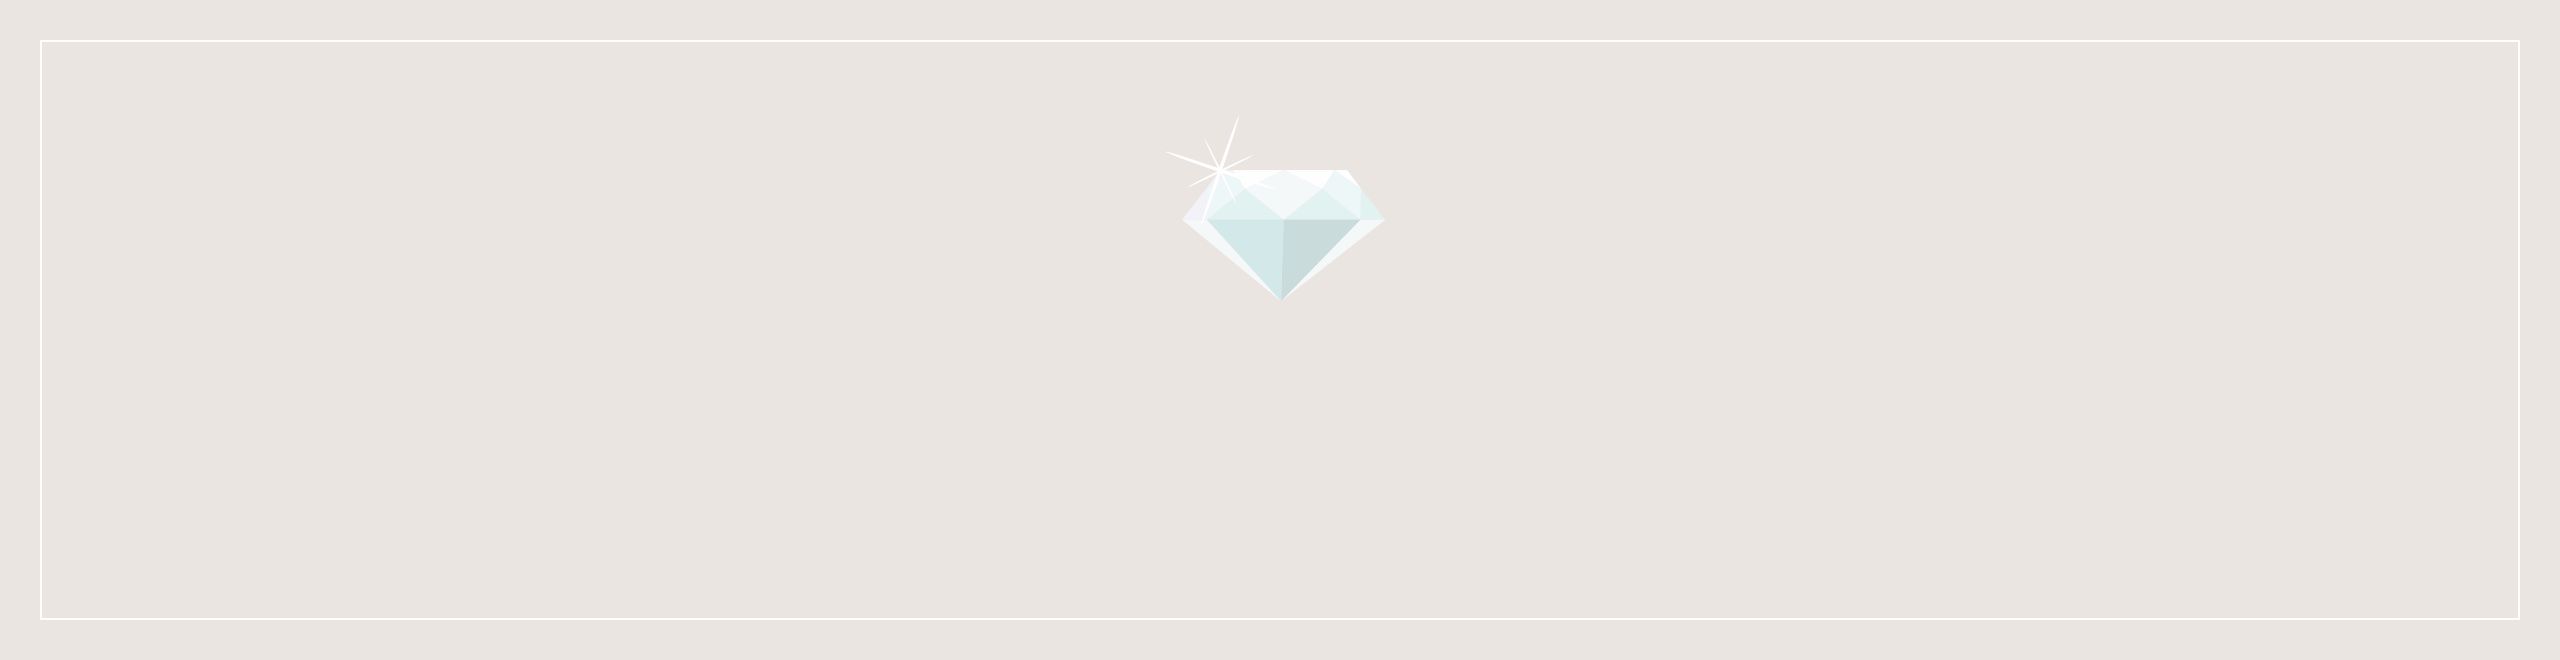 An illustration of a loose diamond